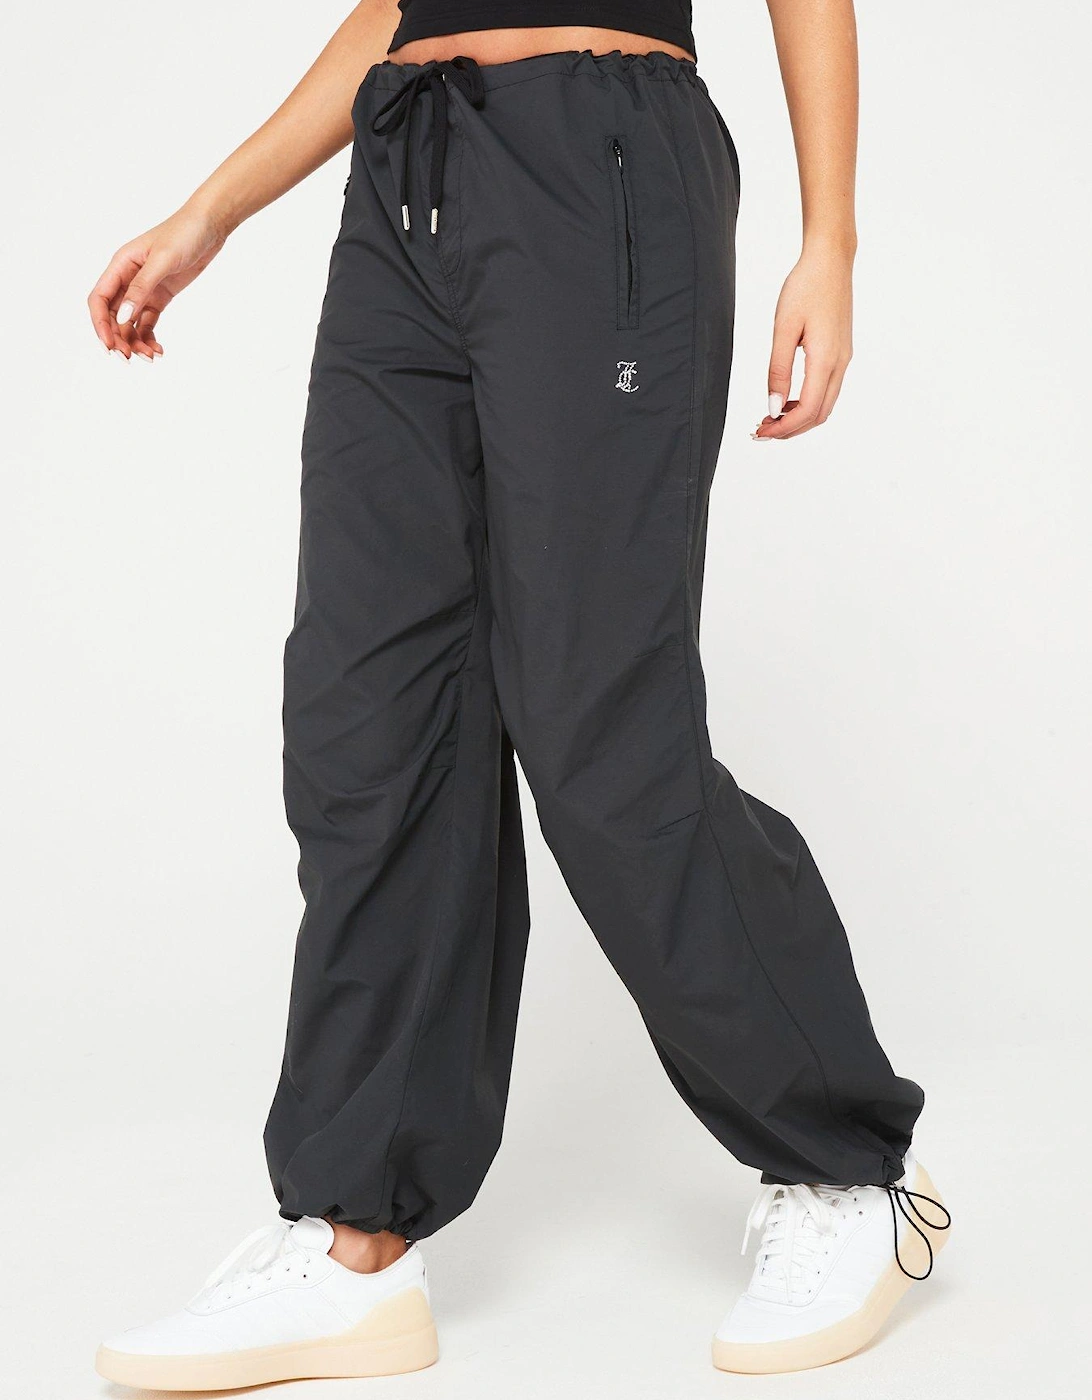 Ayla Nylon Parachute Pants With Juicy Diamante Logo - Black